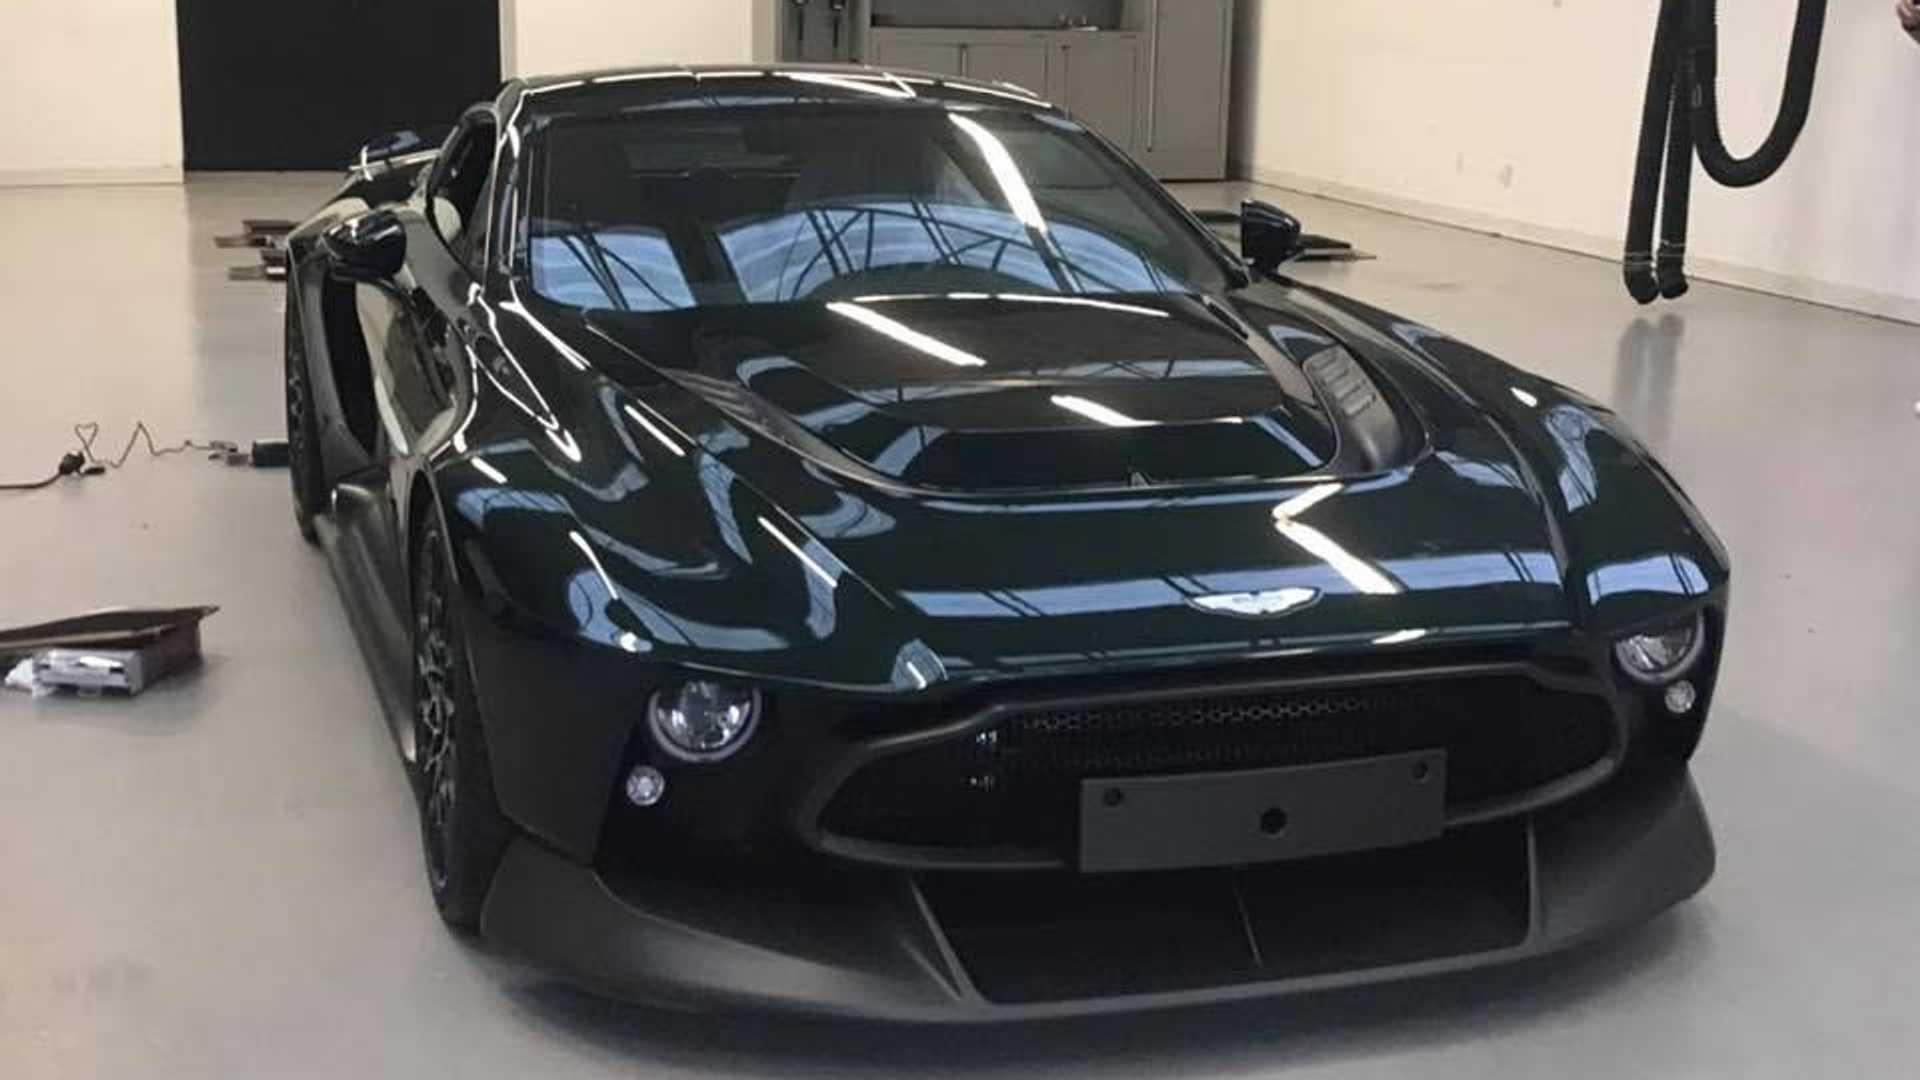 Aston Martin Victor Shows Up At Belgian Dealer Looking Intense